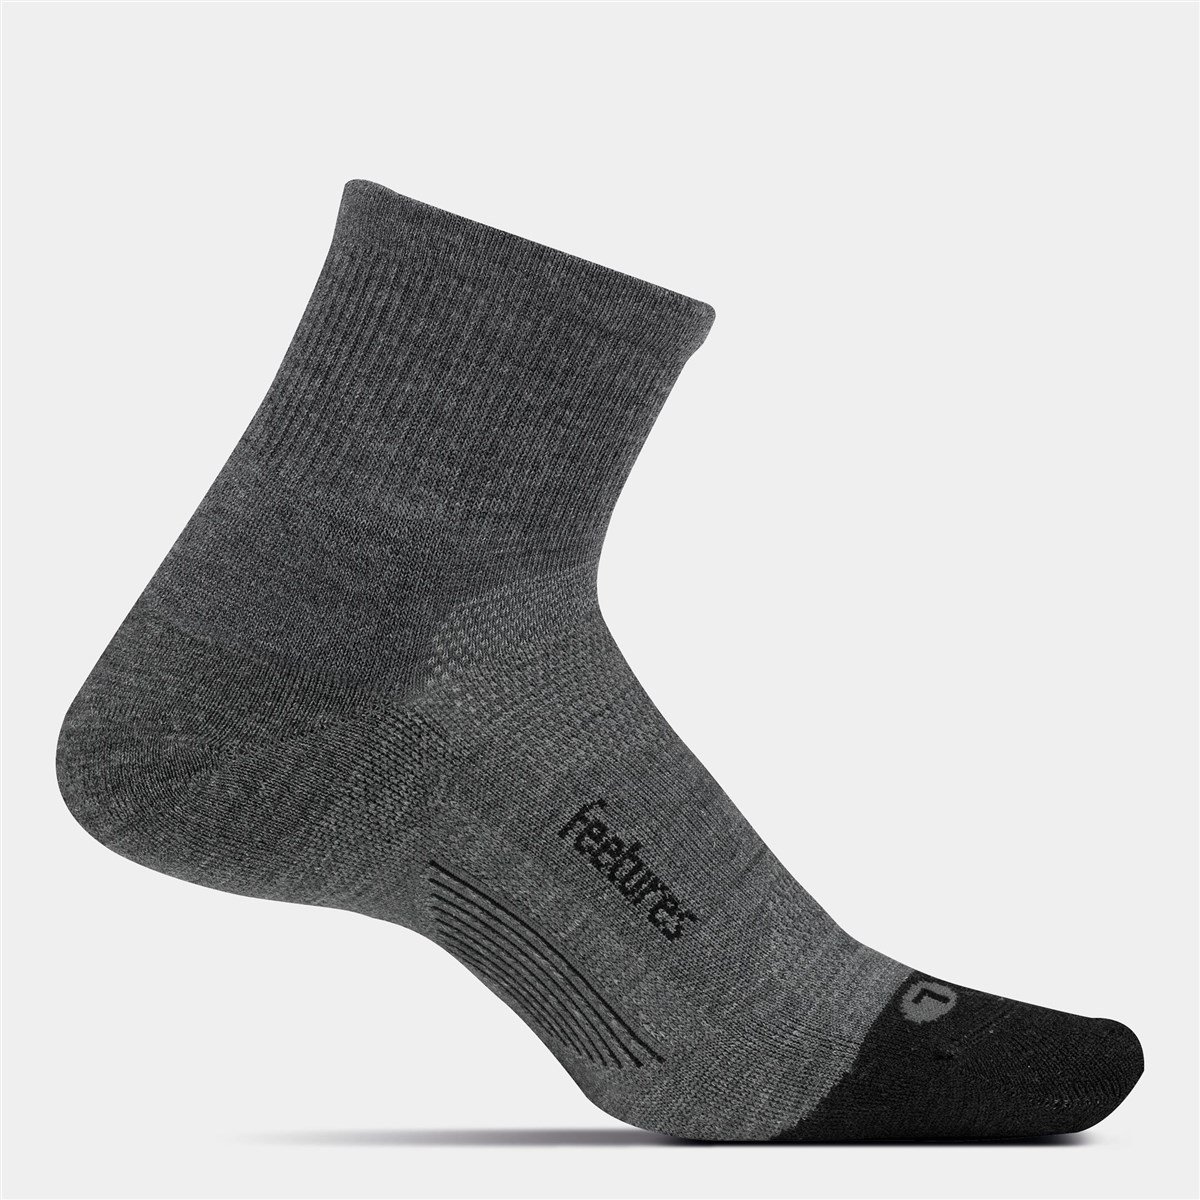 Feetures Merino 10 Cushion Quarter Socks (1 Pair) product image